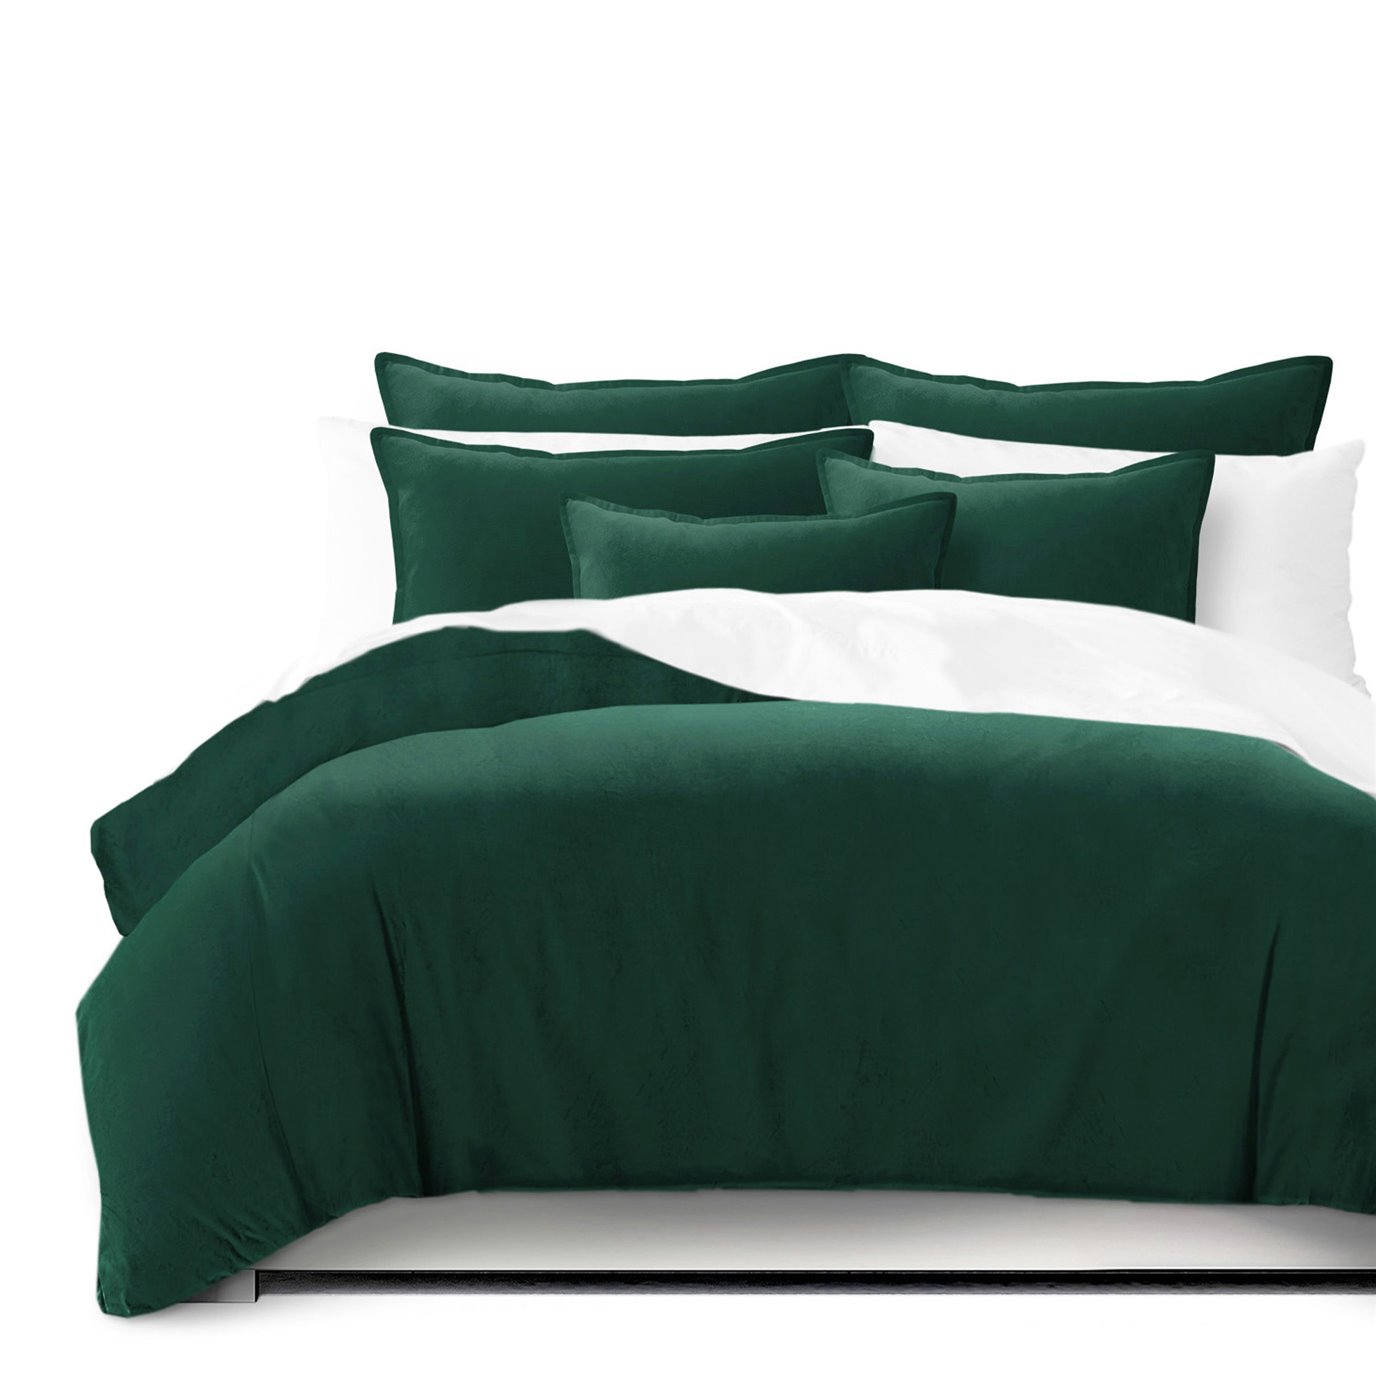 Vanessa Emerald Comforter and Pillow Sham(s) Set - Size Full